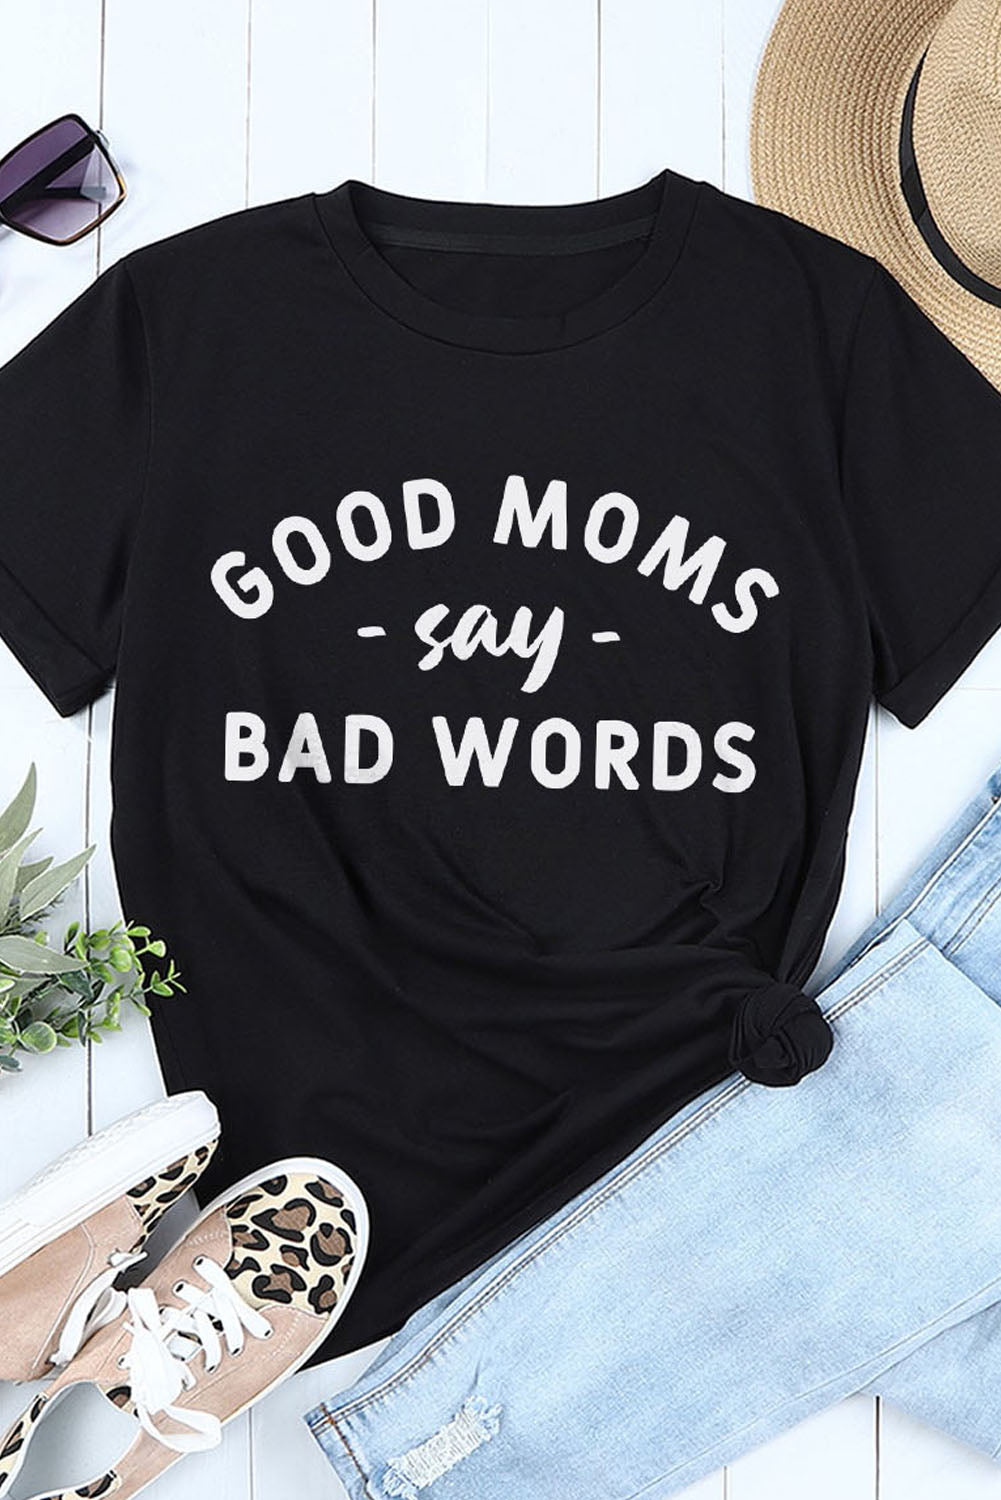 GOOD MOMS SAY BAD WORDS Tee | AdoreStarr